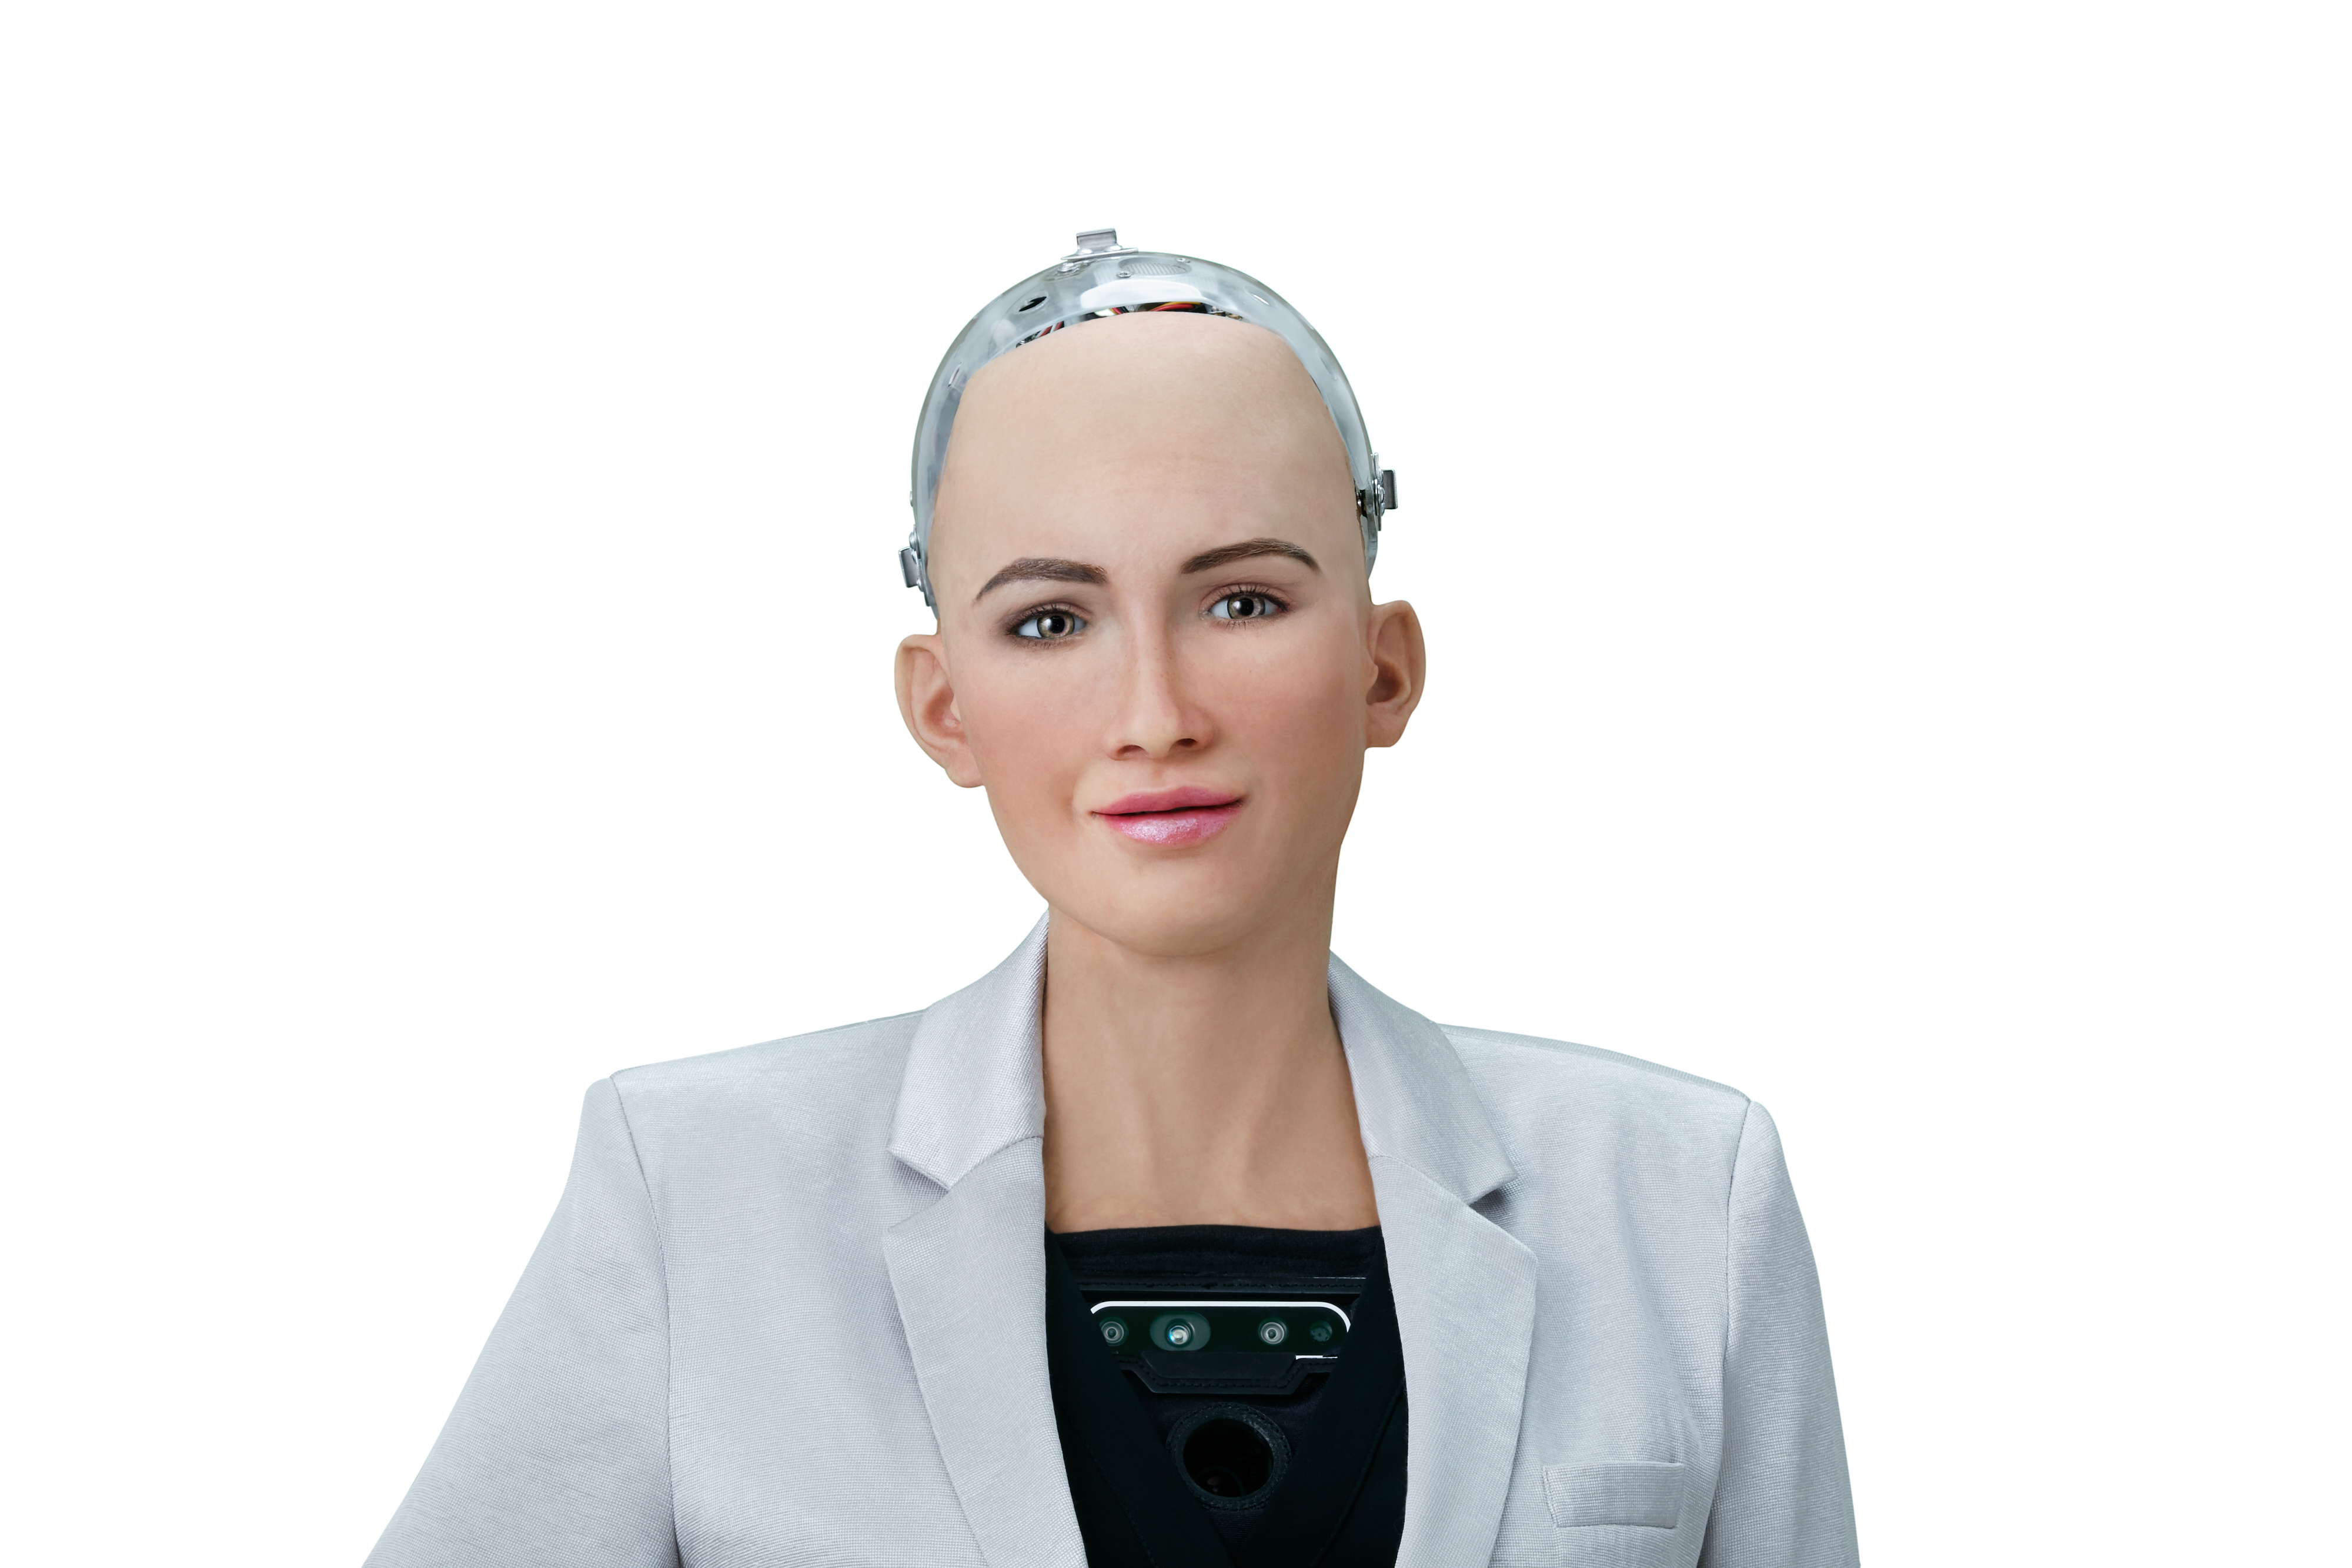 Sophia the robot, the world’s first AI robot citizen